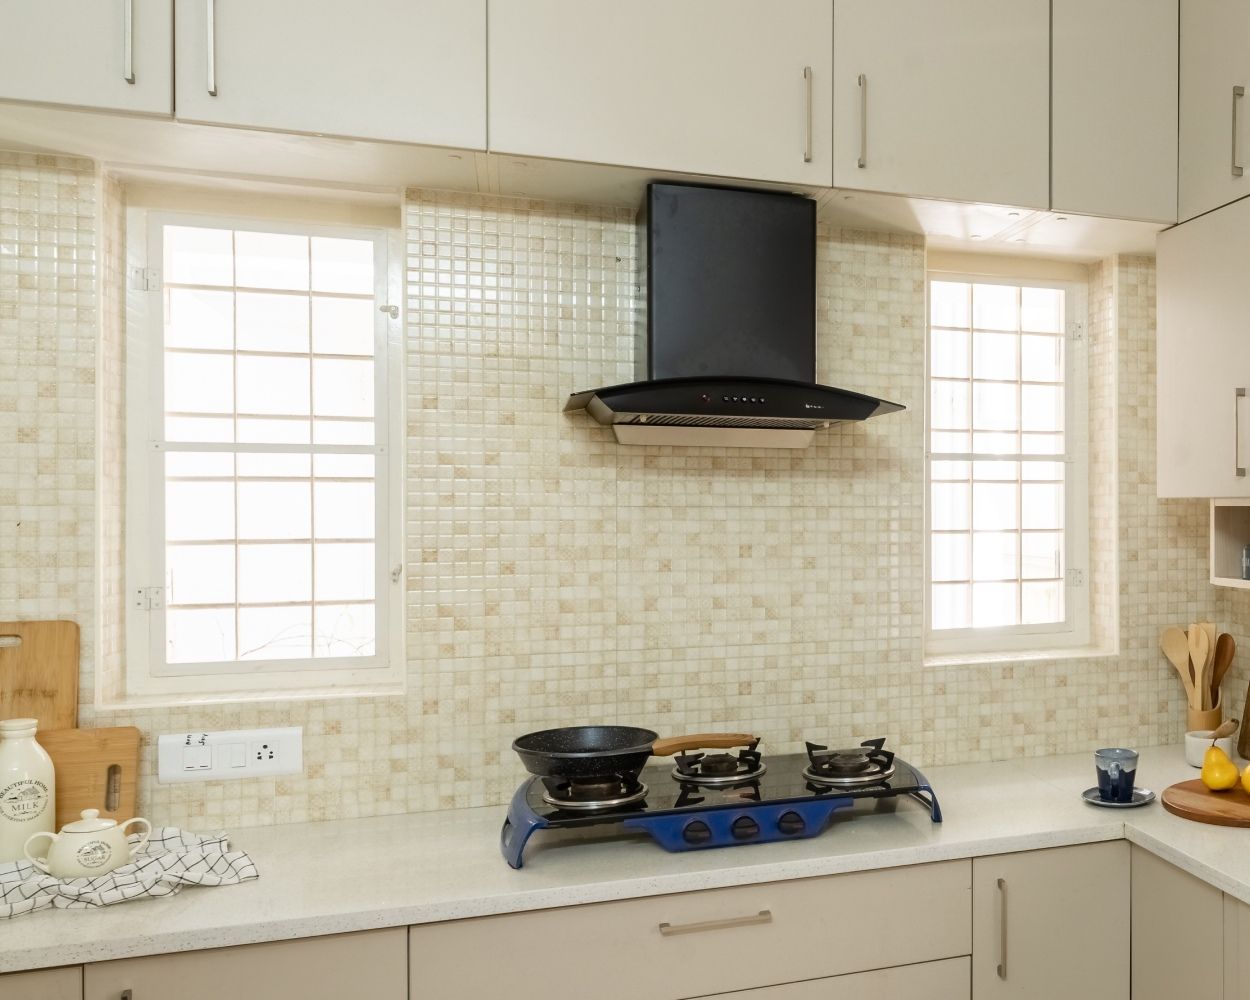 Moder White Swing Window Design For Kitchens